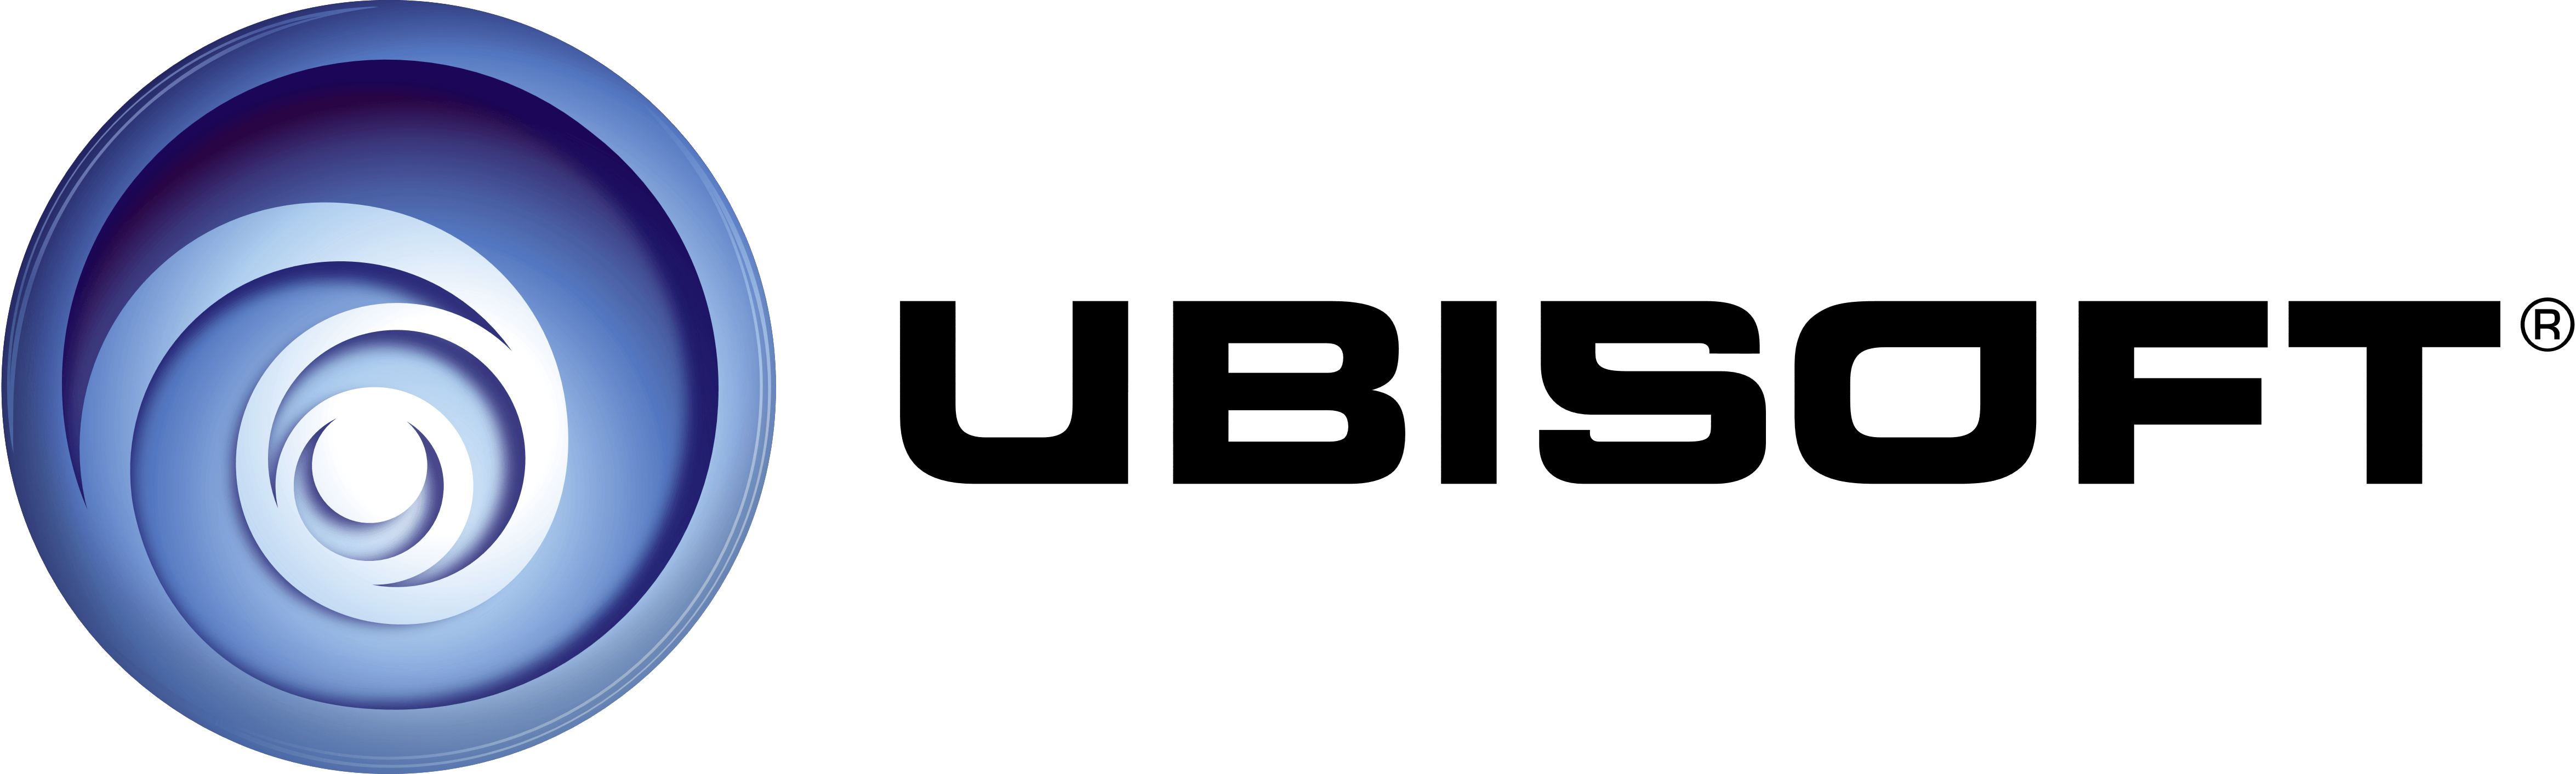 Ubisoft Logo - Ubisoft – Logos Download